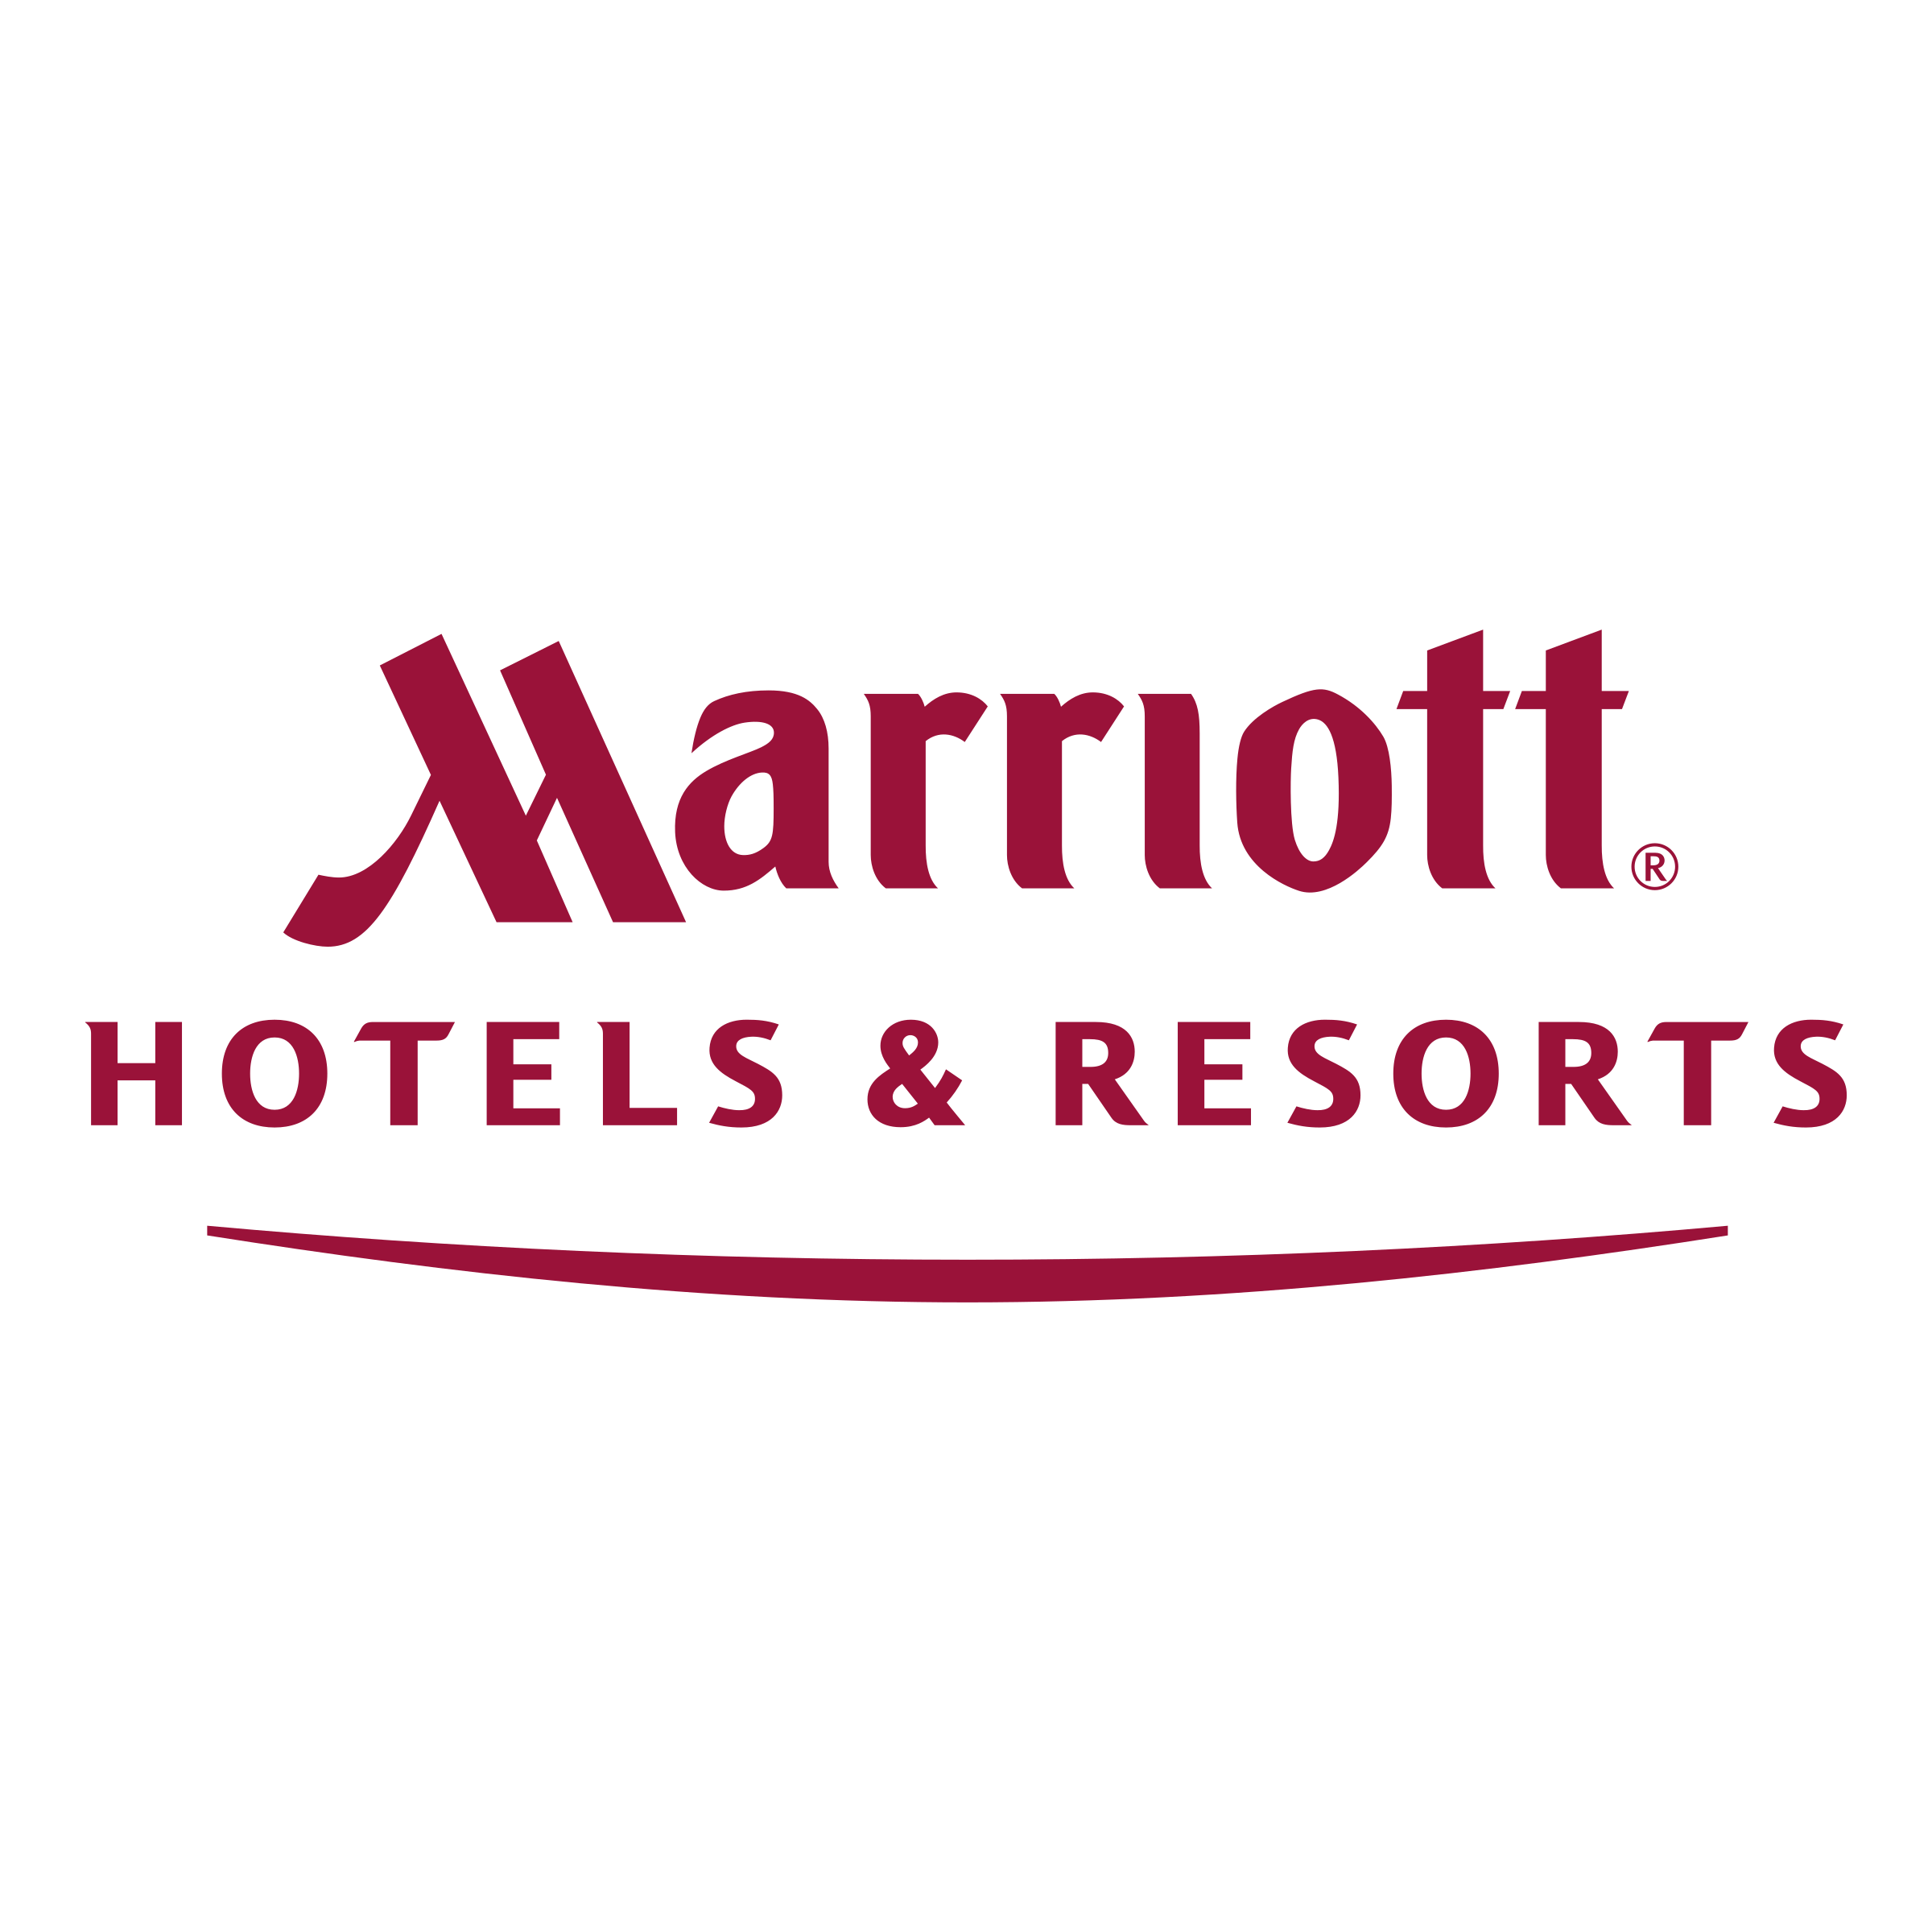 Hotels and Resorts Logo - Marriott Hotels & Resorts Logo PNG Transparent & SVG Vector ...